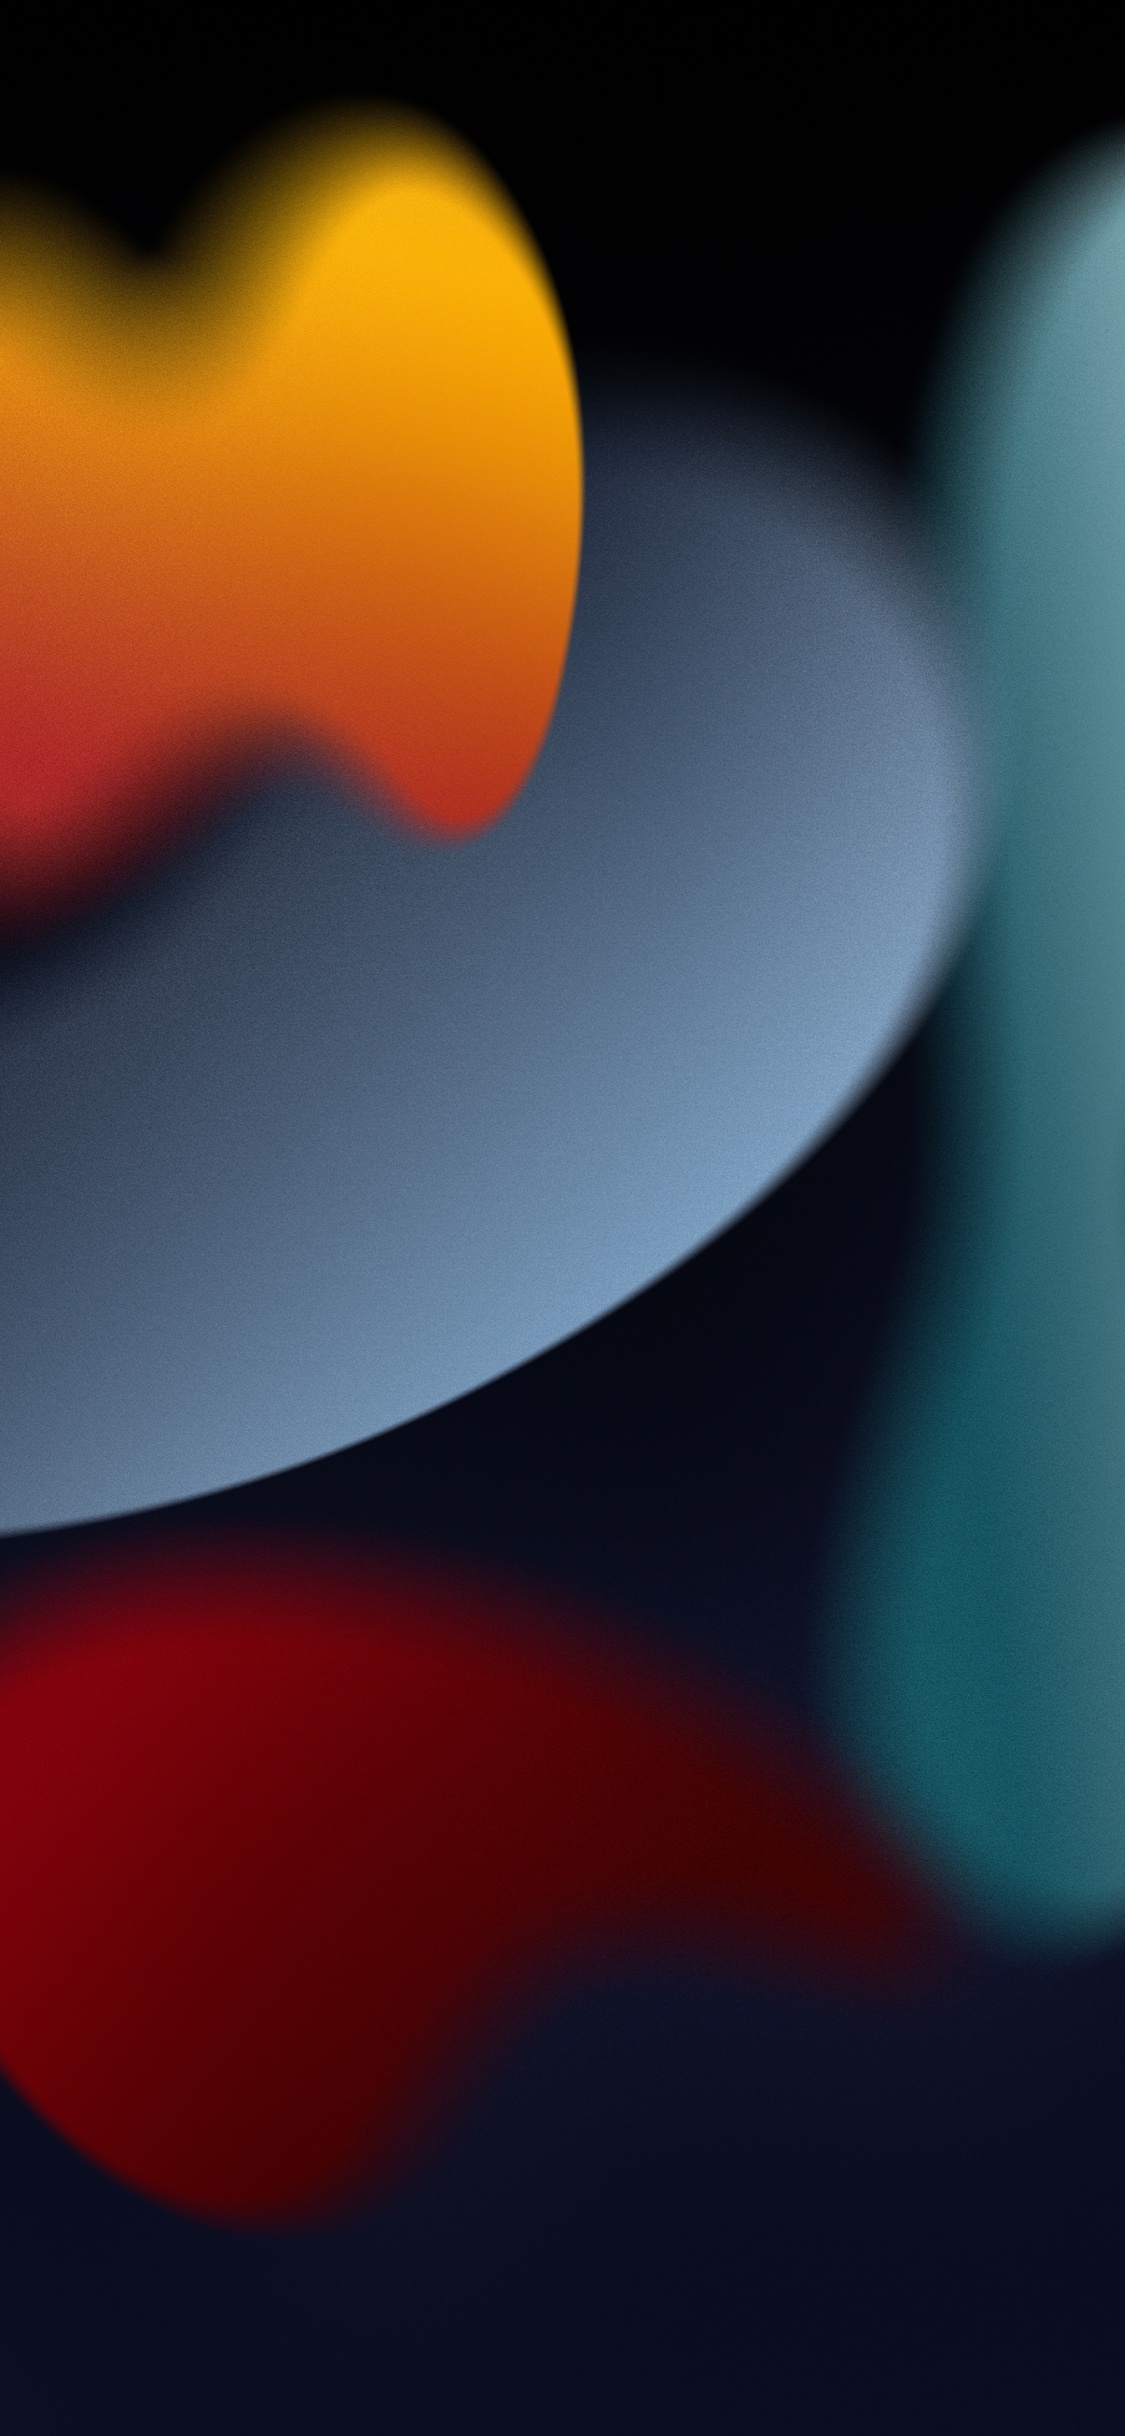 iOS 15 Wallpaper 4K, Stock, Dark Mode, iPadOS WWDC HDR, Abstract